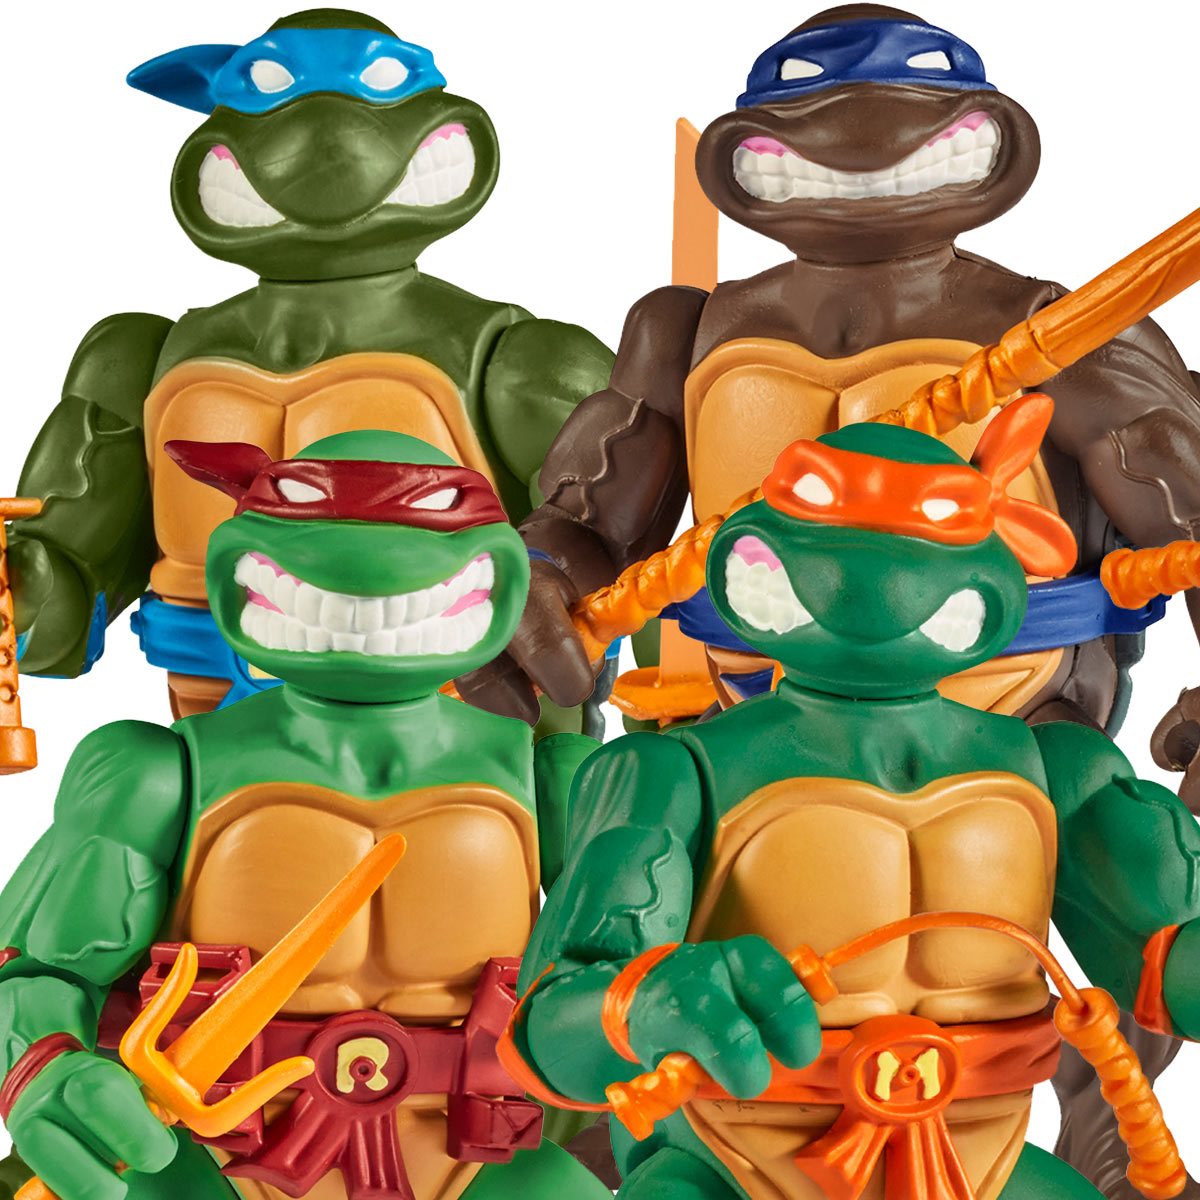 Teenage Mutant Ninja Turtles Original Classic Shell Basic Action Figure Case of 6